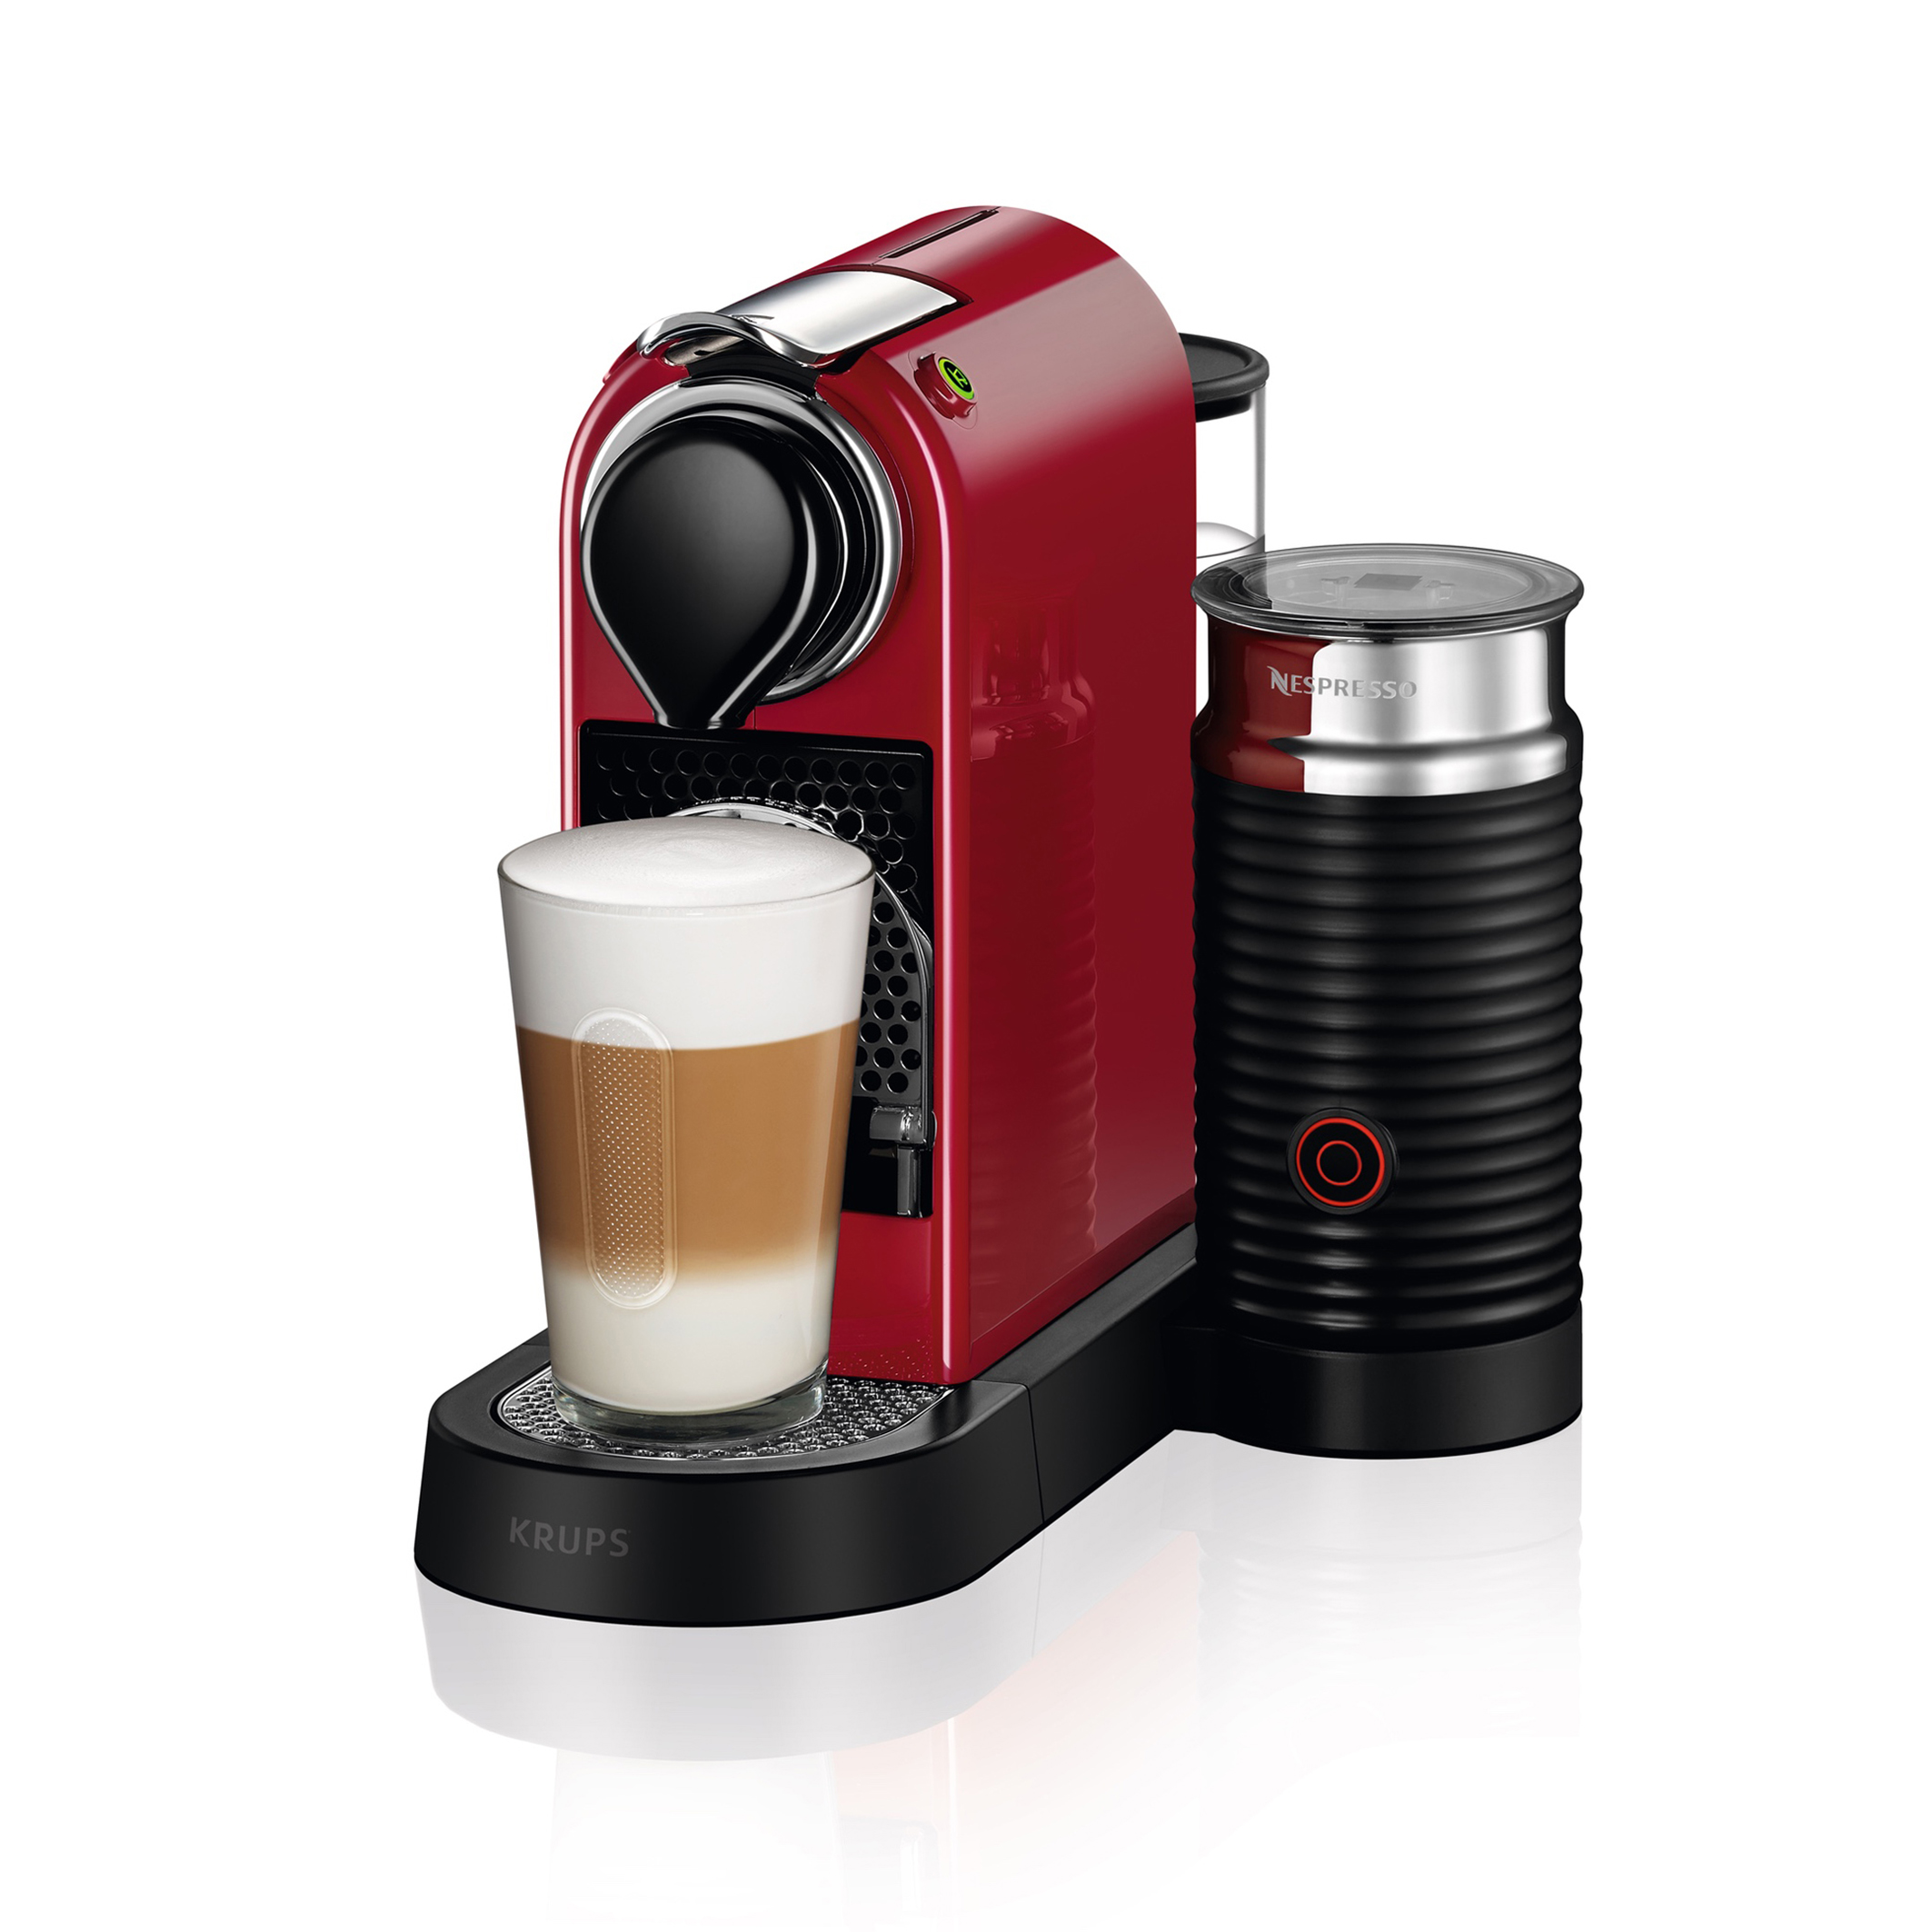 Spin reservoir Spijsverteringsorgaan Koffiemachine nespresso citiz & milk yy4116fd rood Krups | La Redoute